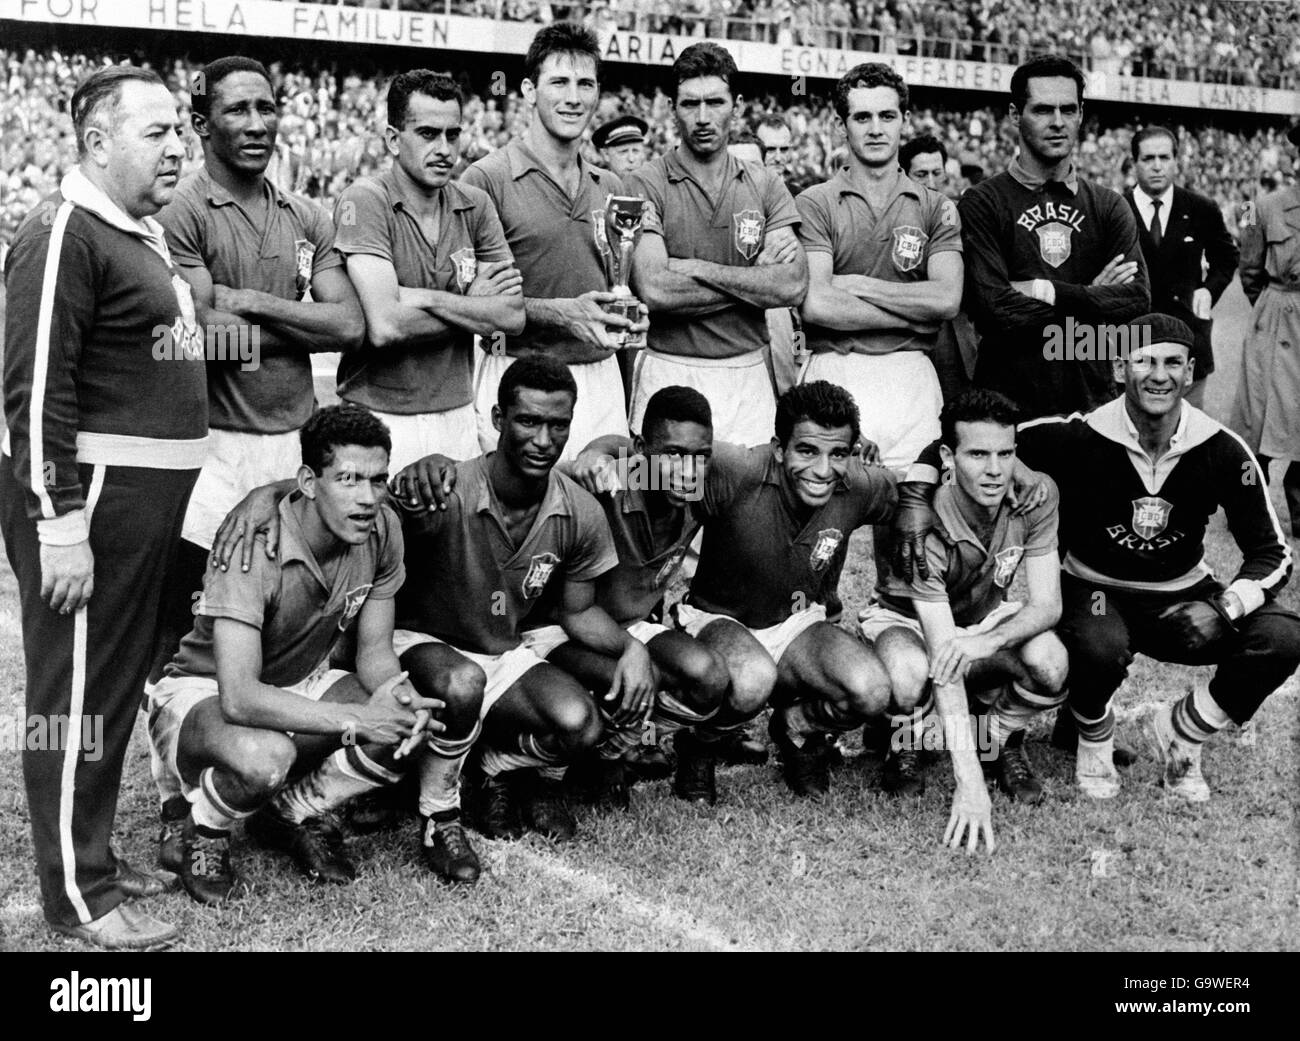 The victorious Brazil team with the trophy: (back row, l-r) Coach Vicente Feola, Djalma Santos, Zito, Bellini, Nilton Santos, Orlando, Gilmar (front row, l-r) Garrincha, Didi, Pele, Vava, Mario Zagallo, trainer Stock Photo